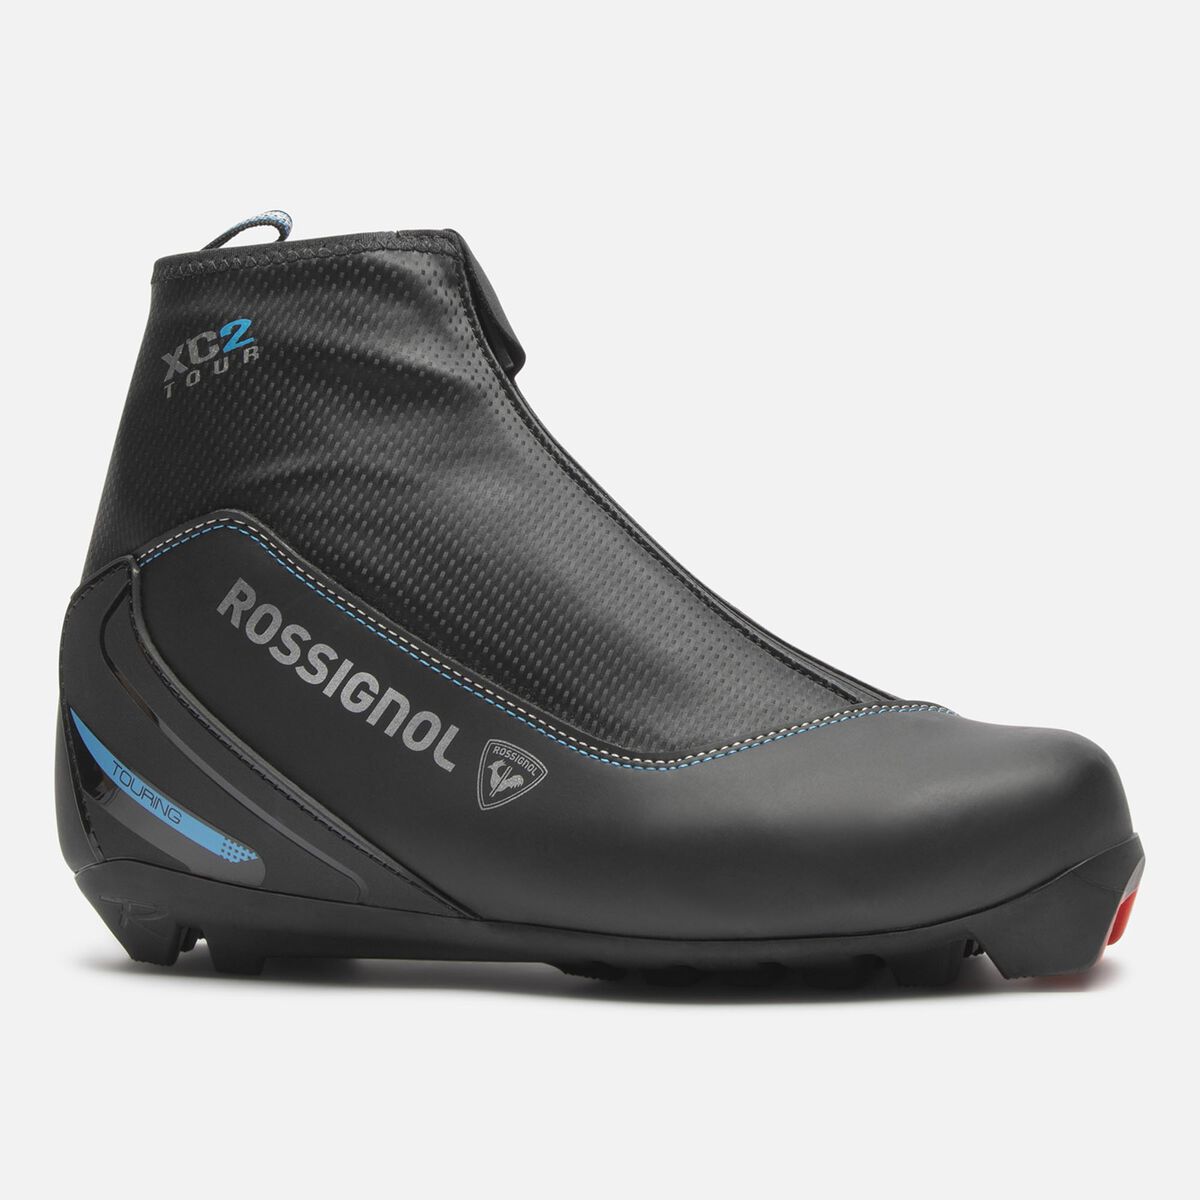 Chaussures de ski alpin Rossignol Chaussure de ski femme Rossignol